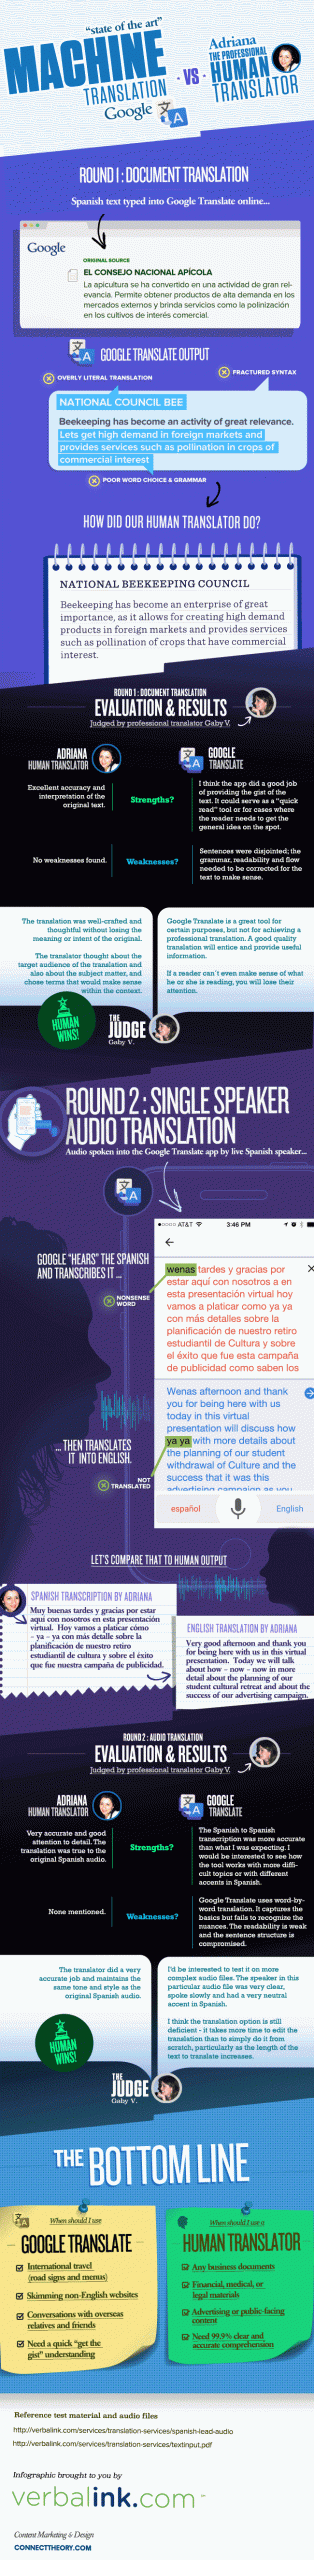 machine translation vs human translation infographic